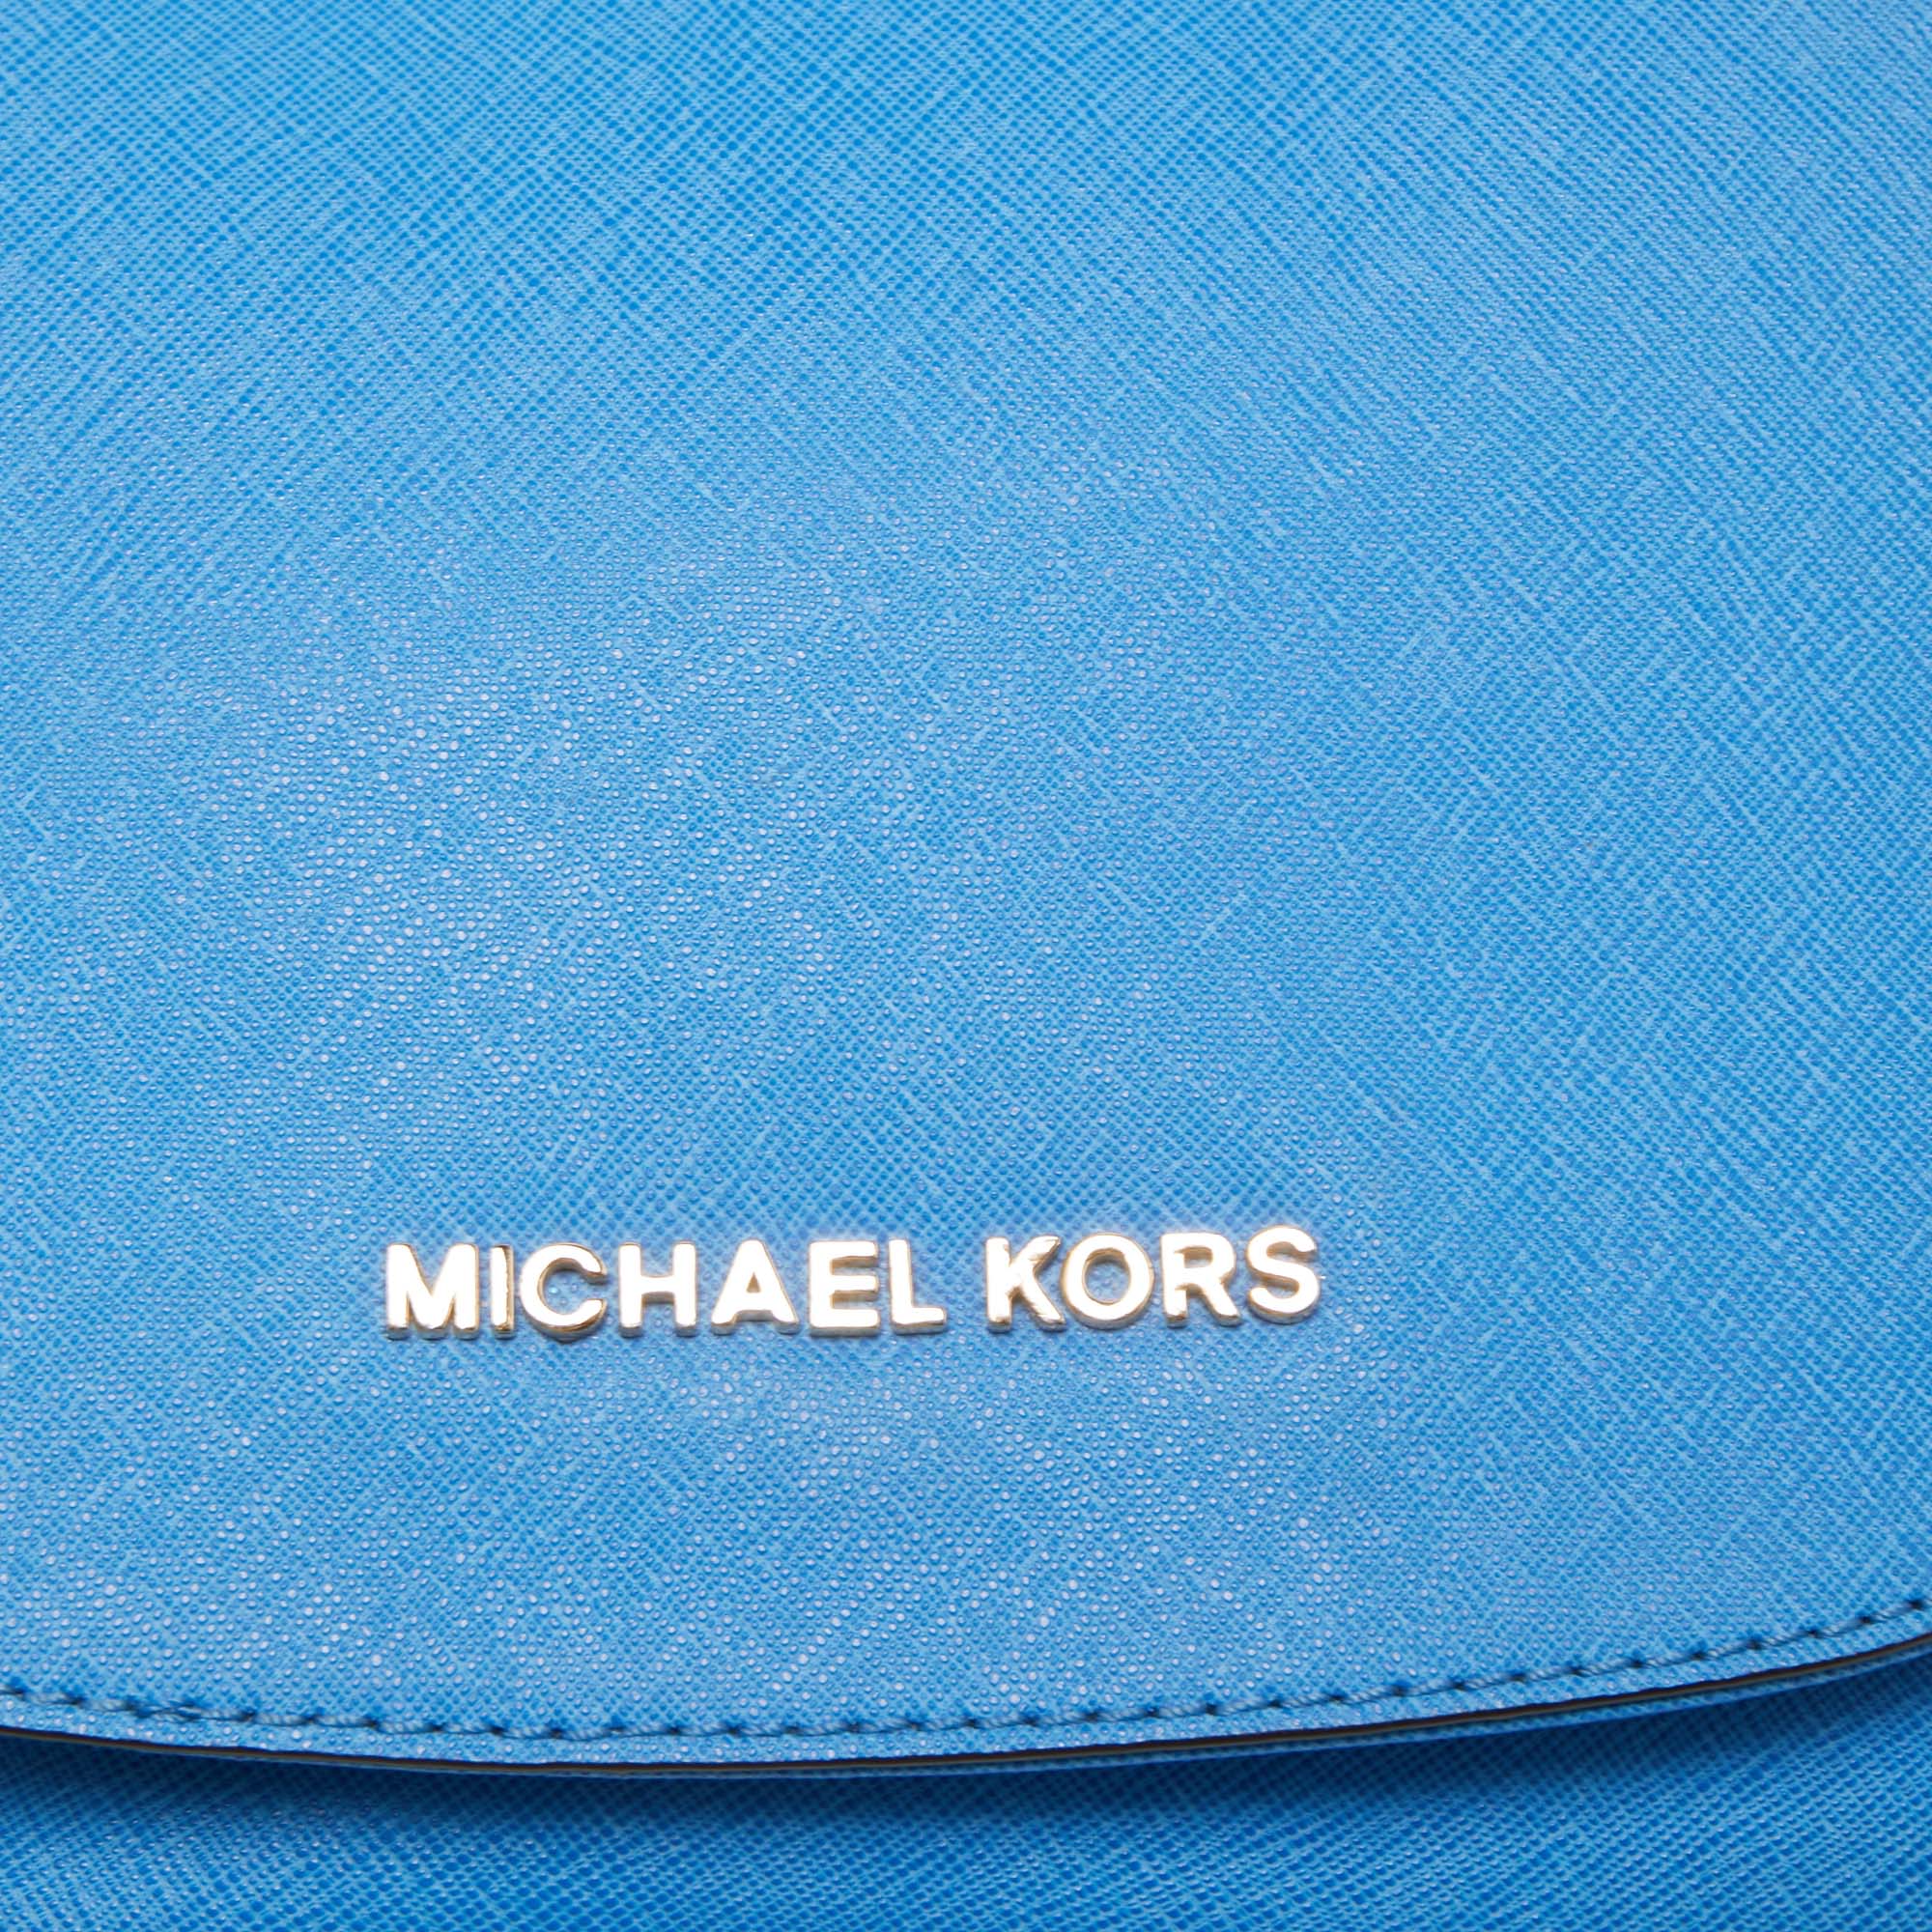 Michael Kors Blue Leather Hamilton Crossbody Bag